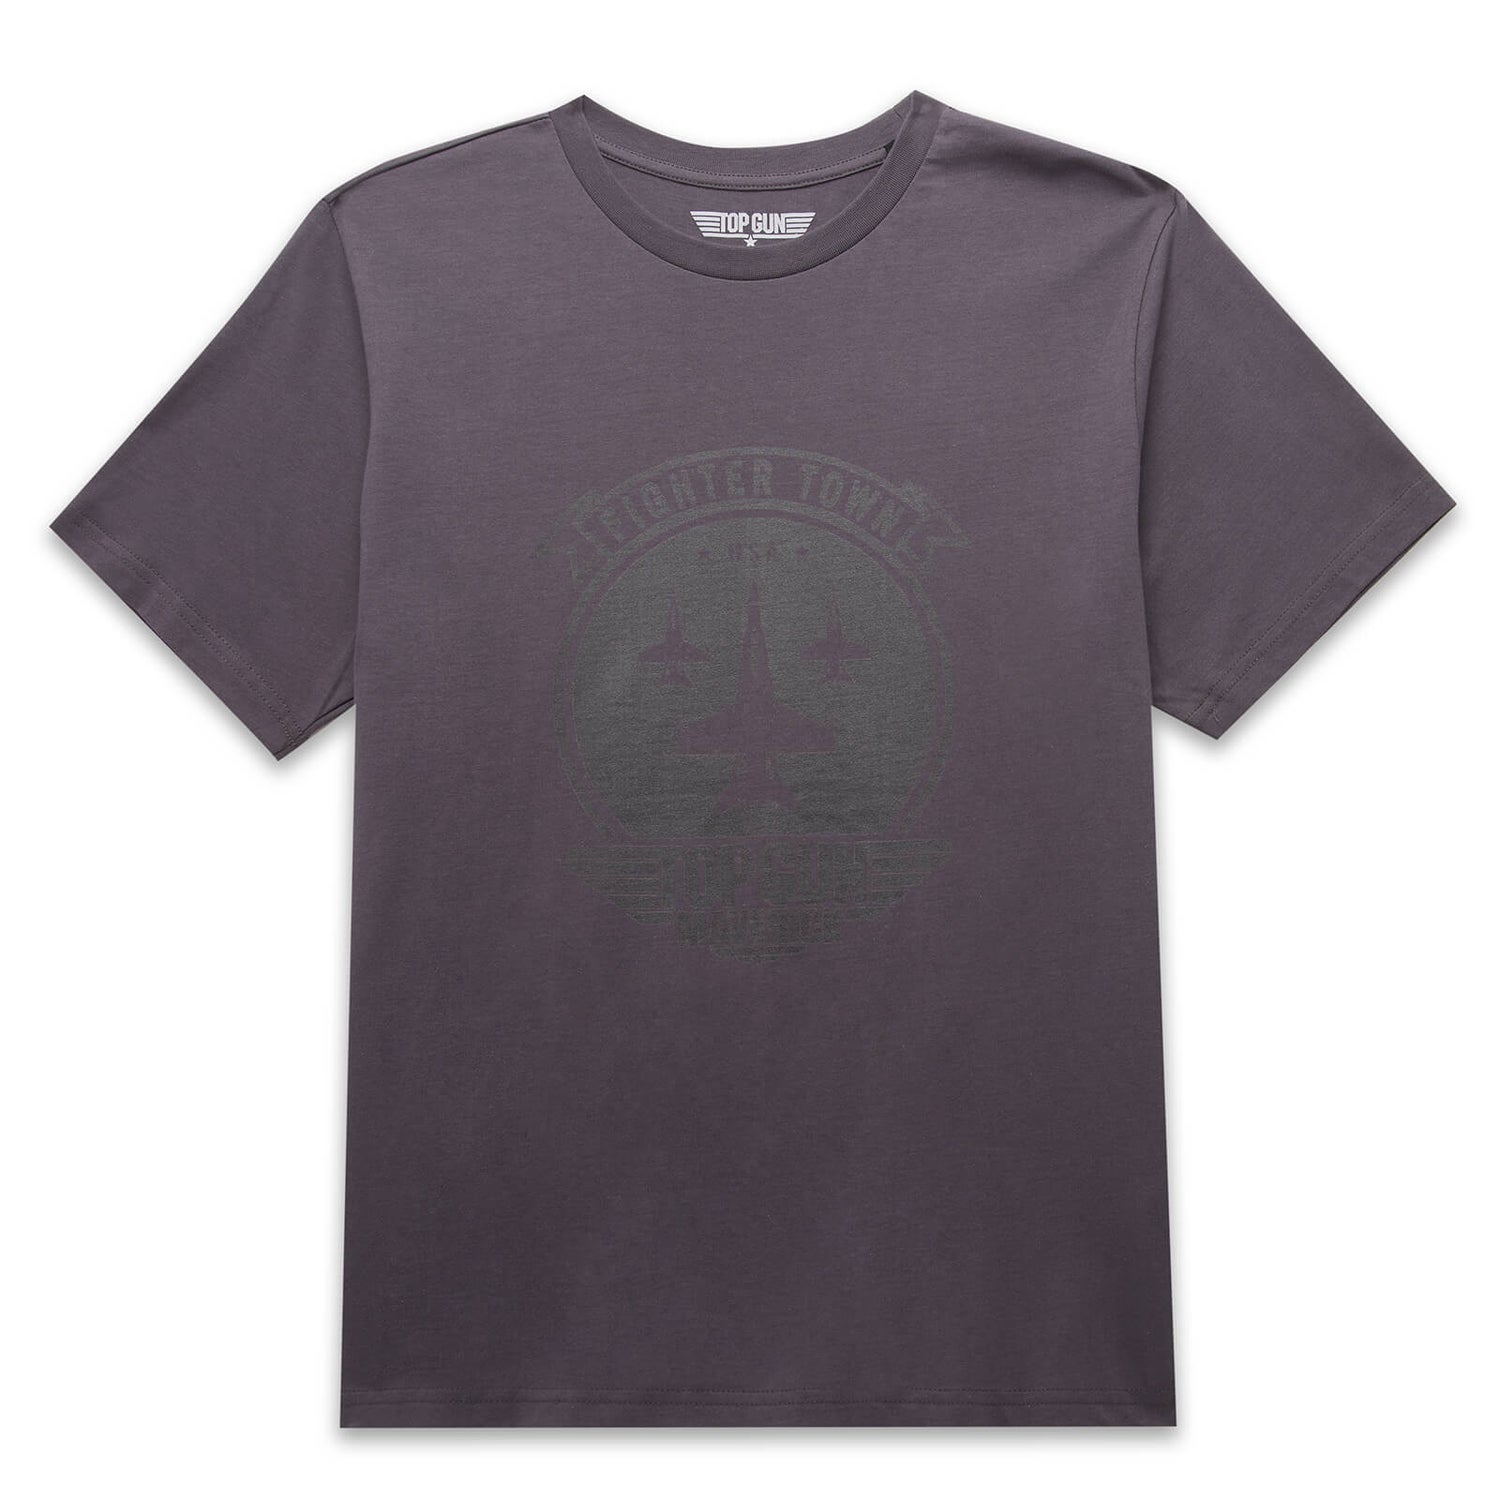 Camiseta unisex de Top Gun Fighter Town - Gris oscuro